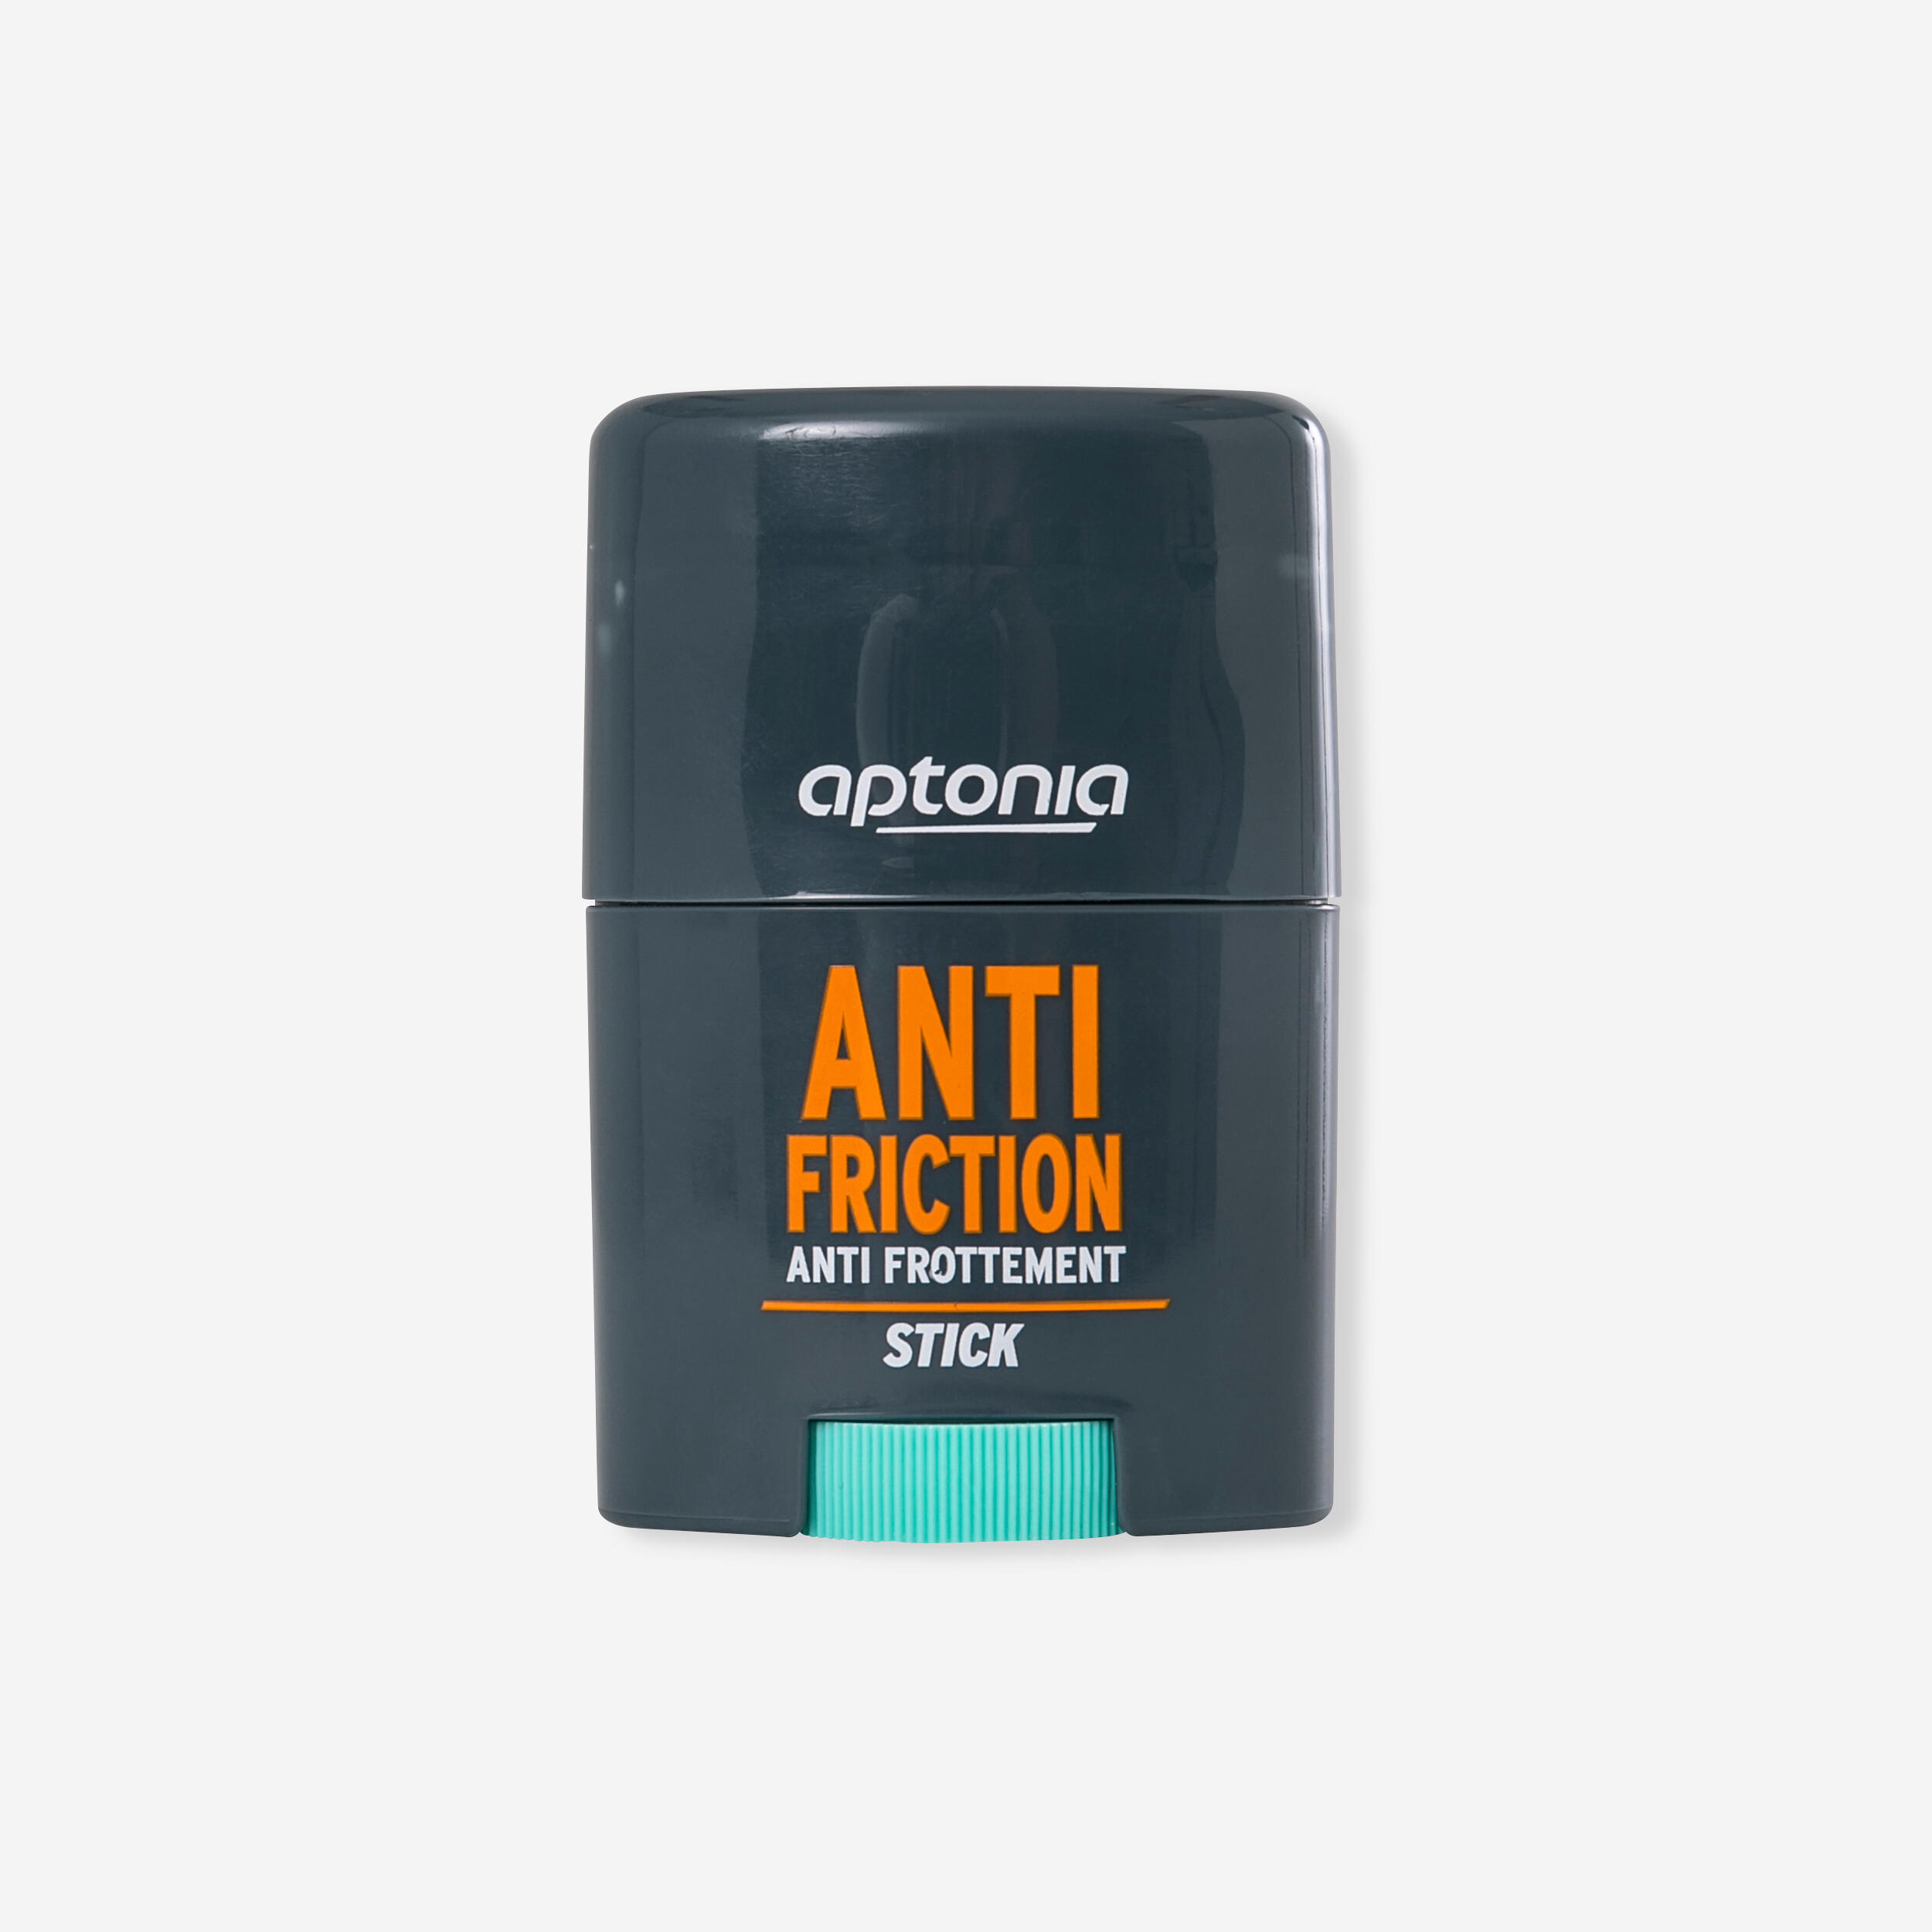 anti friction aptonia